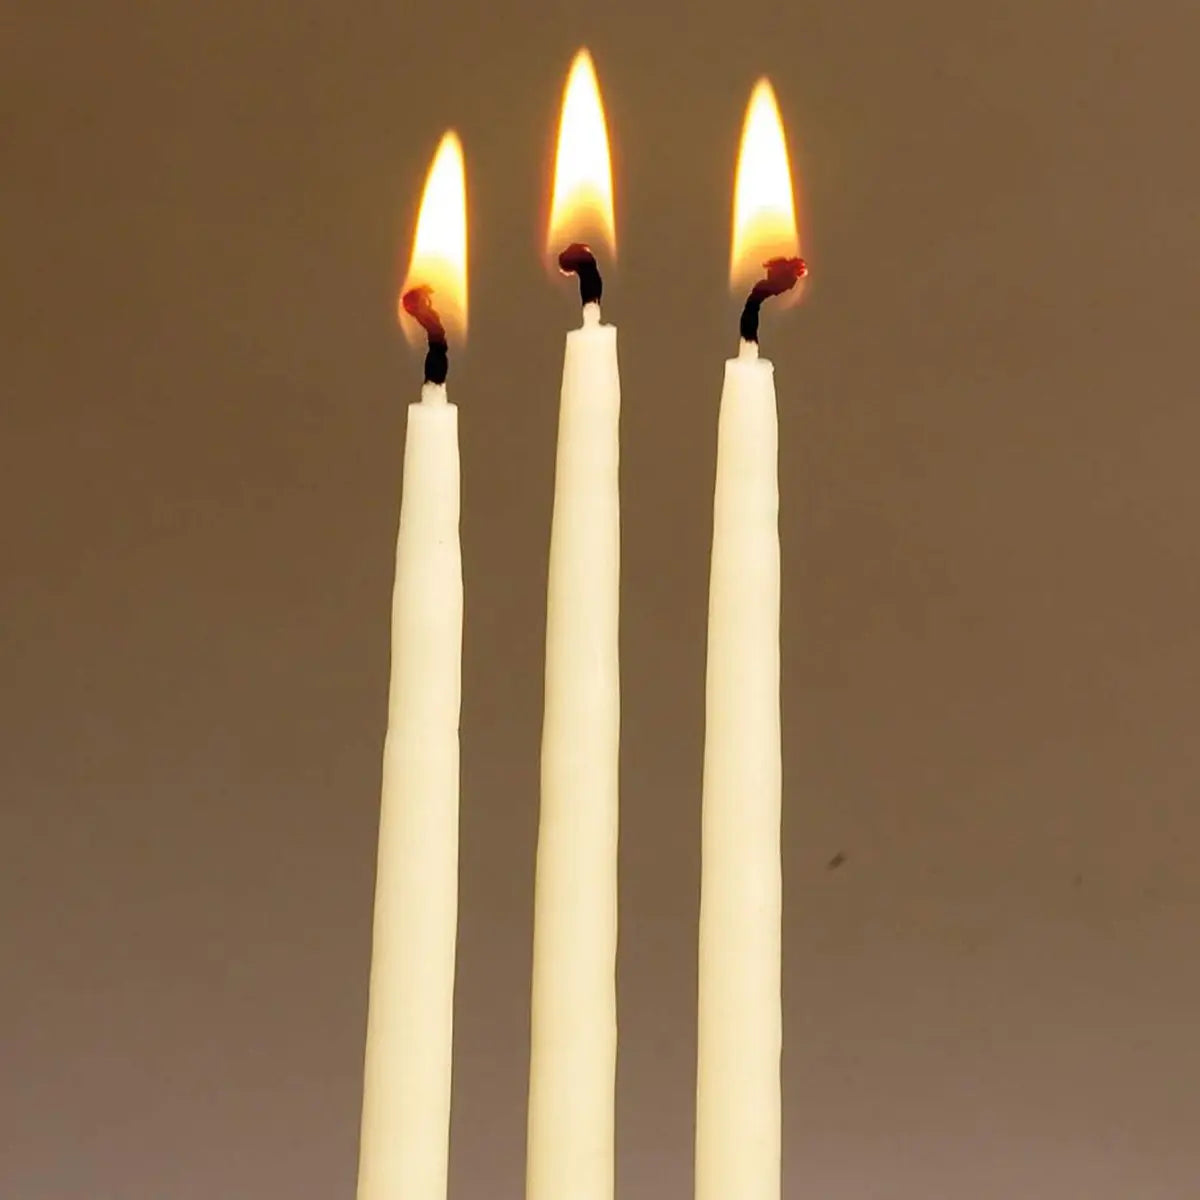 three Rite Lite Hand Dipped Natural Wax Ivory Hanukah Candles lit